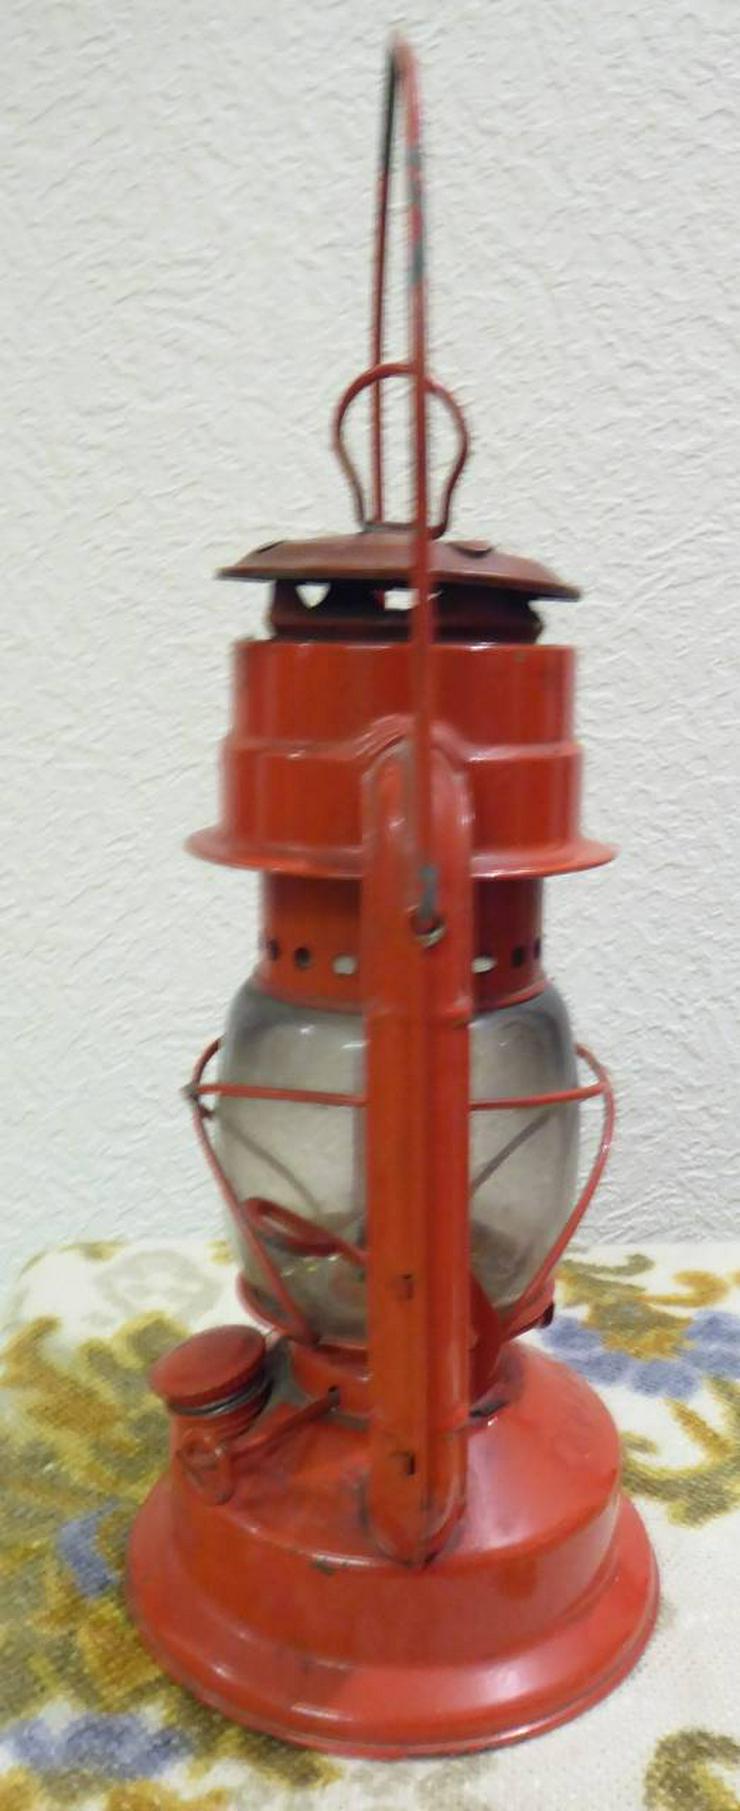 Bild 3: rote Petroleumlampe, 25 cm hoch